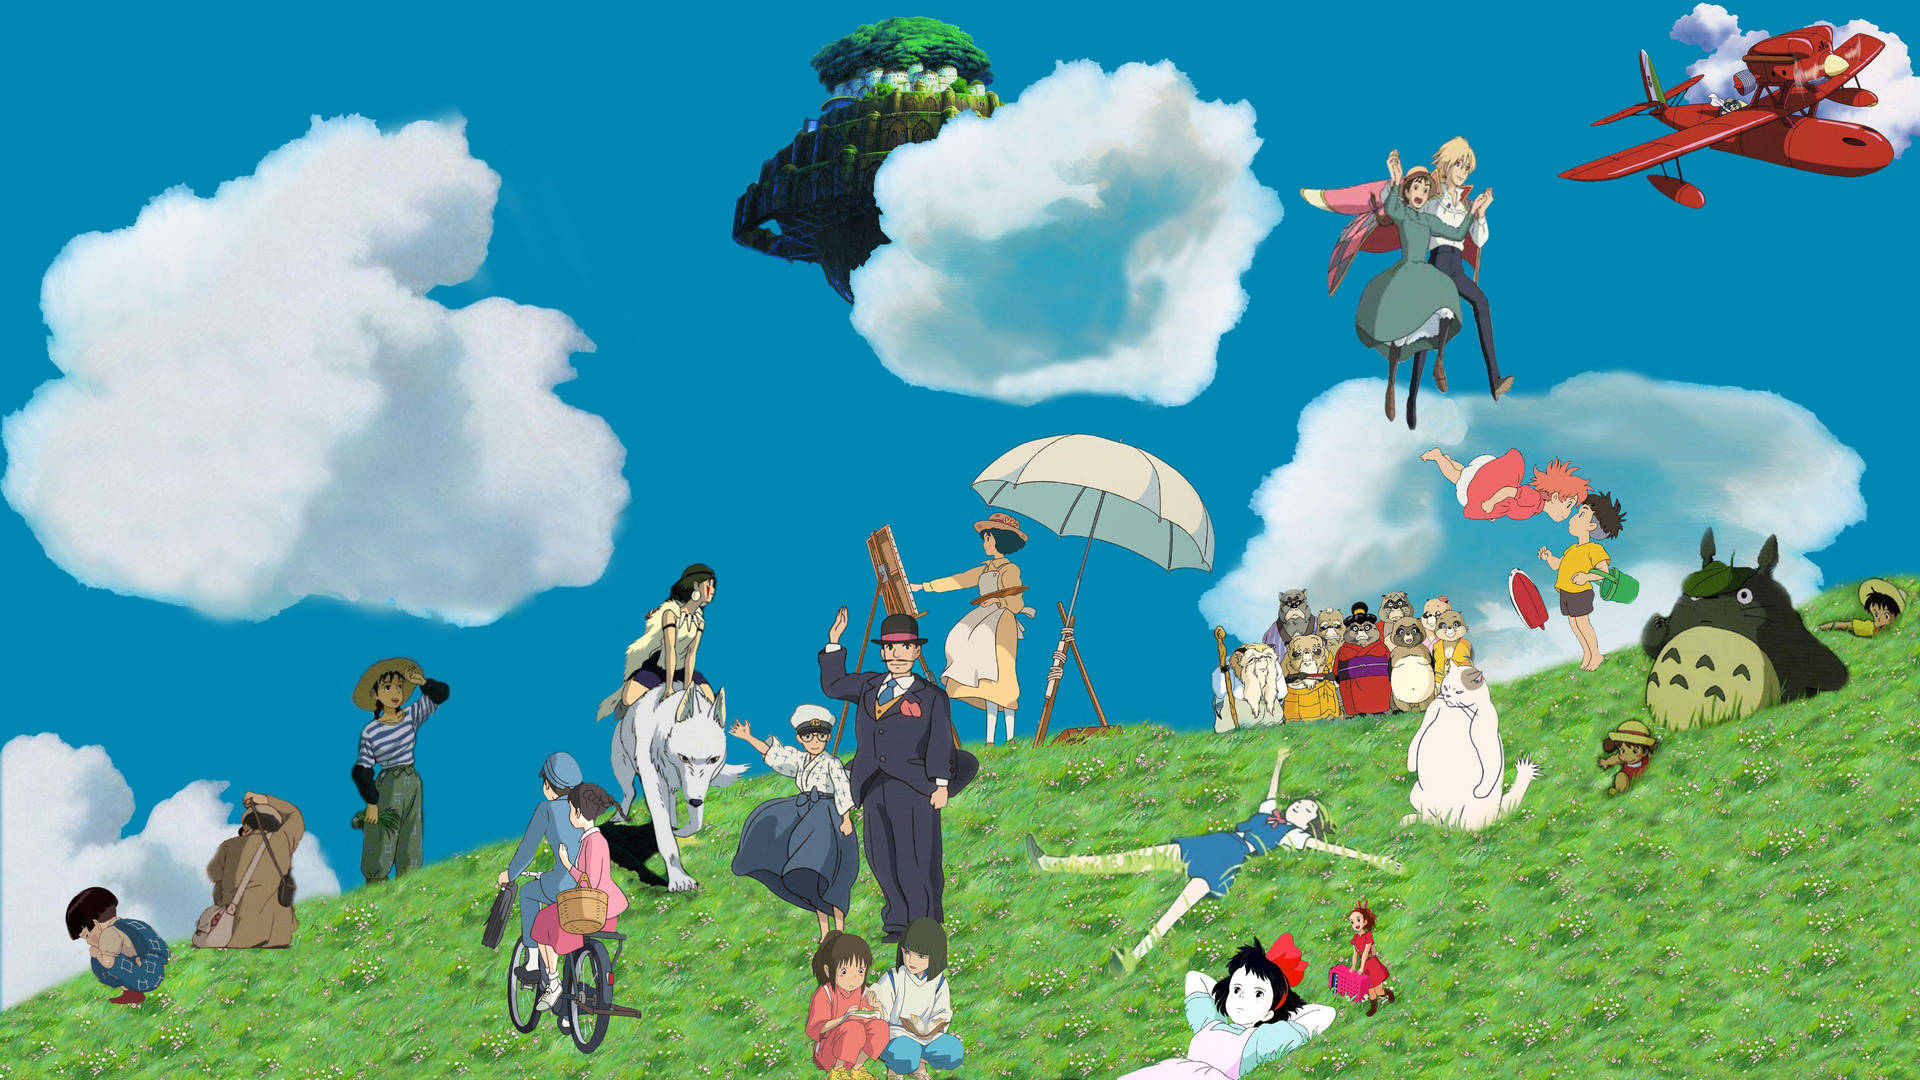 Fun and adventure awaits in the films of Studio Ghibli! Wallpaper